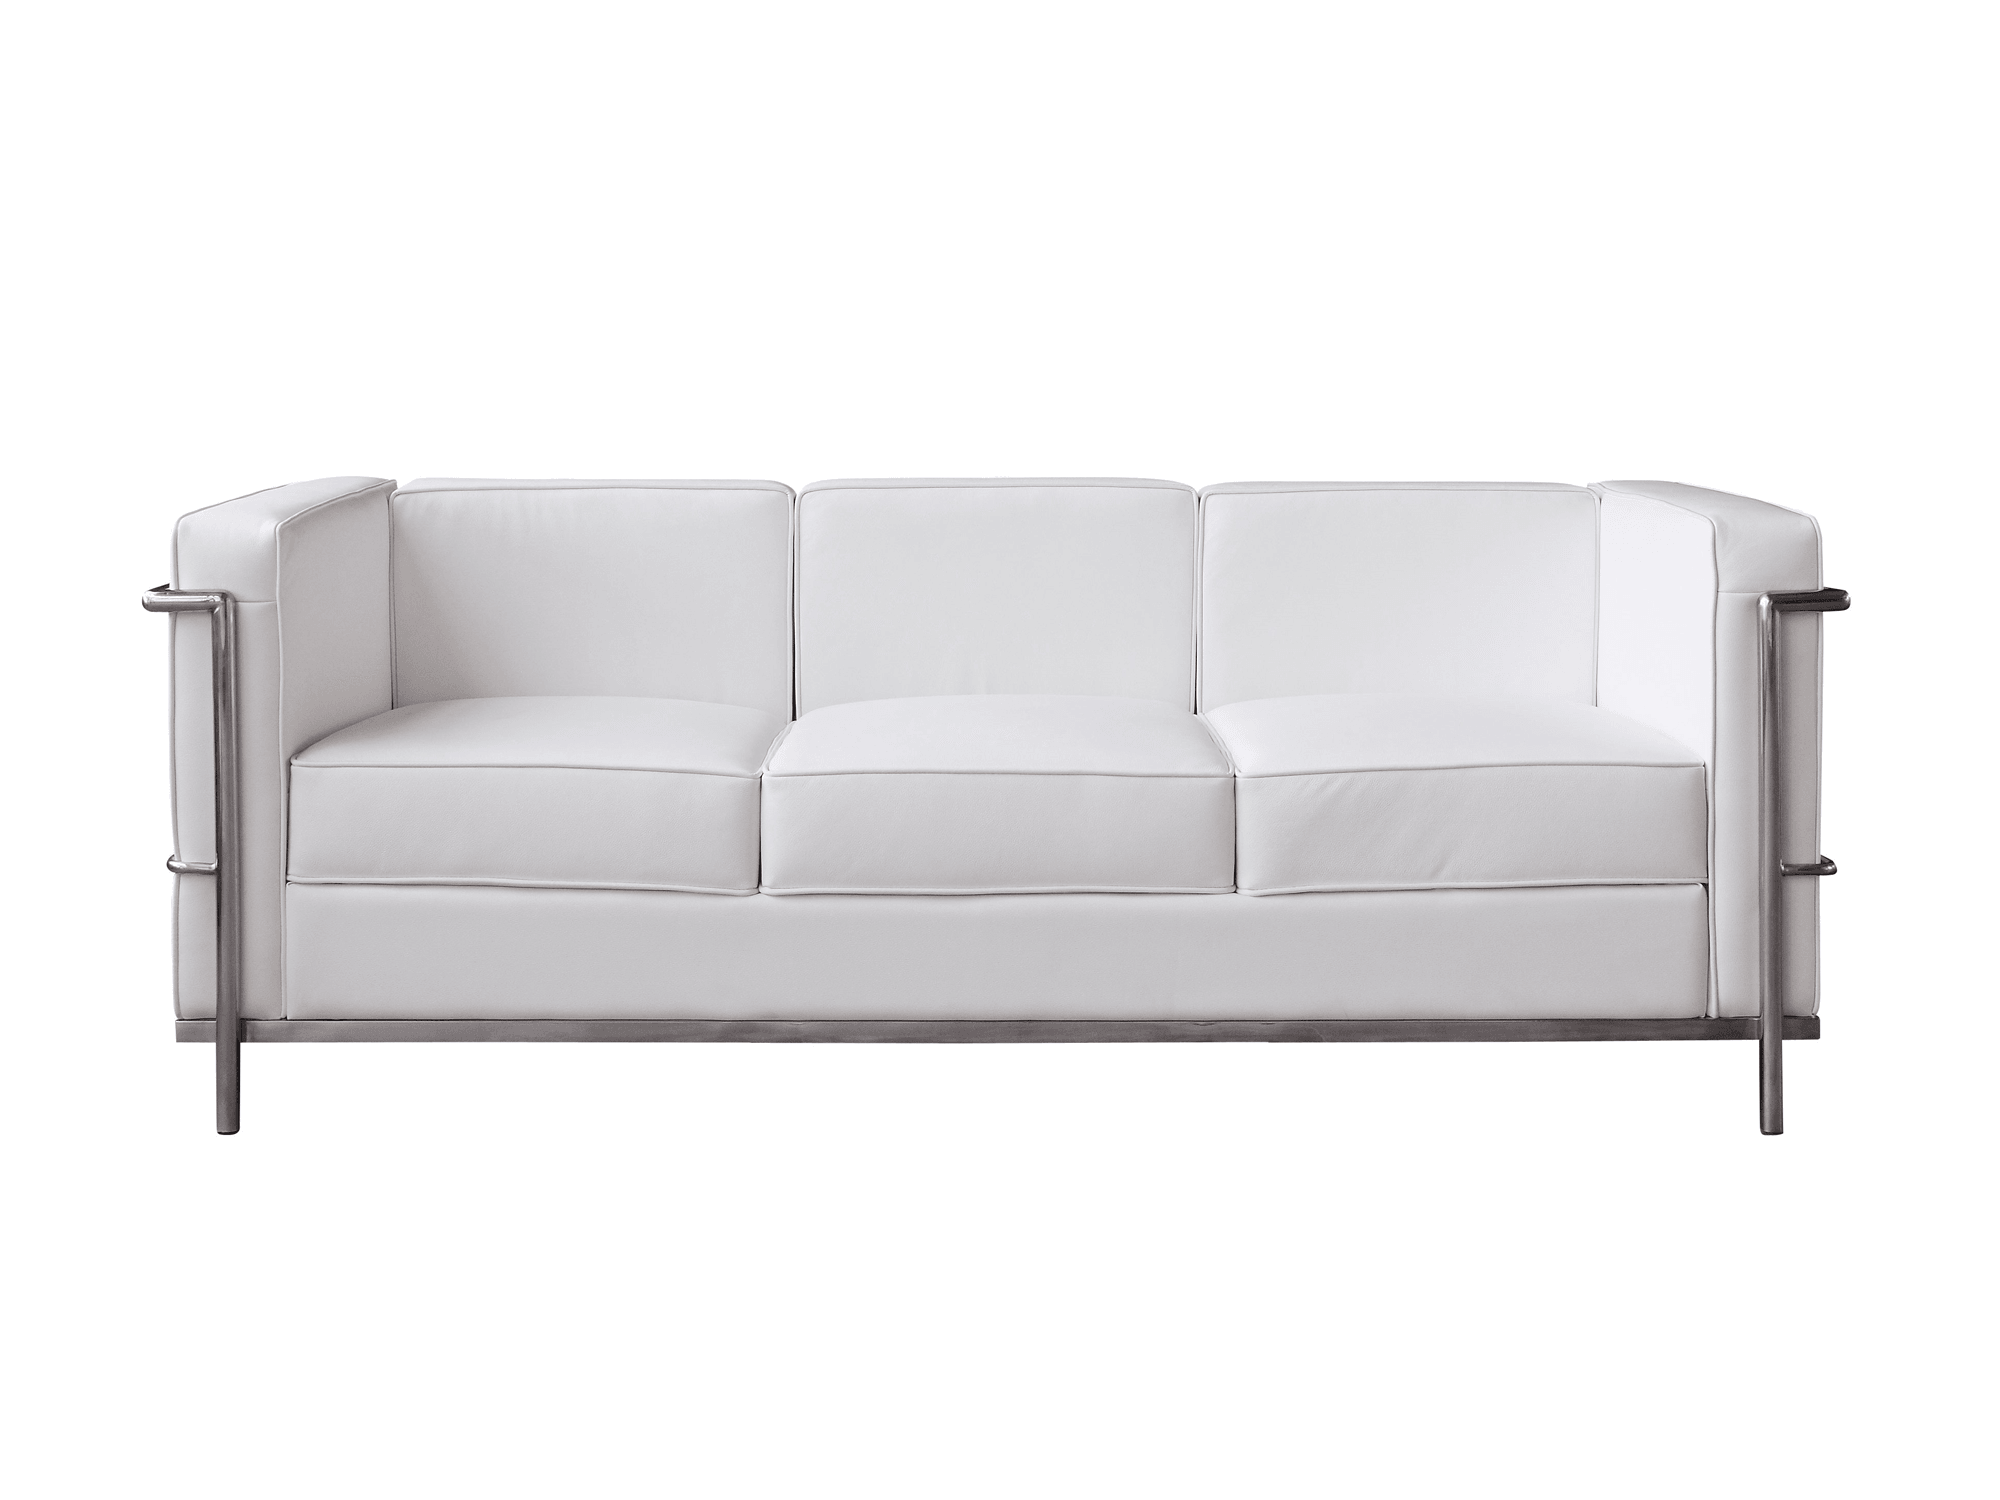  White Leather Sofa